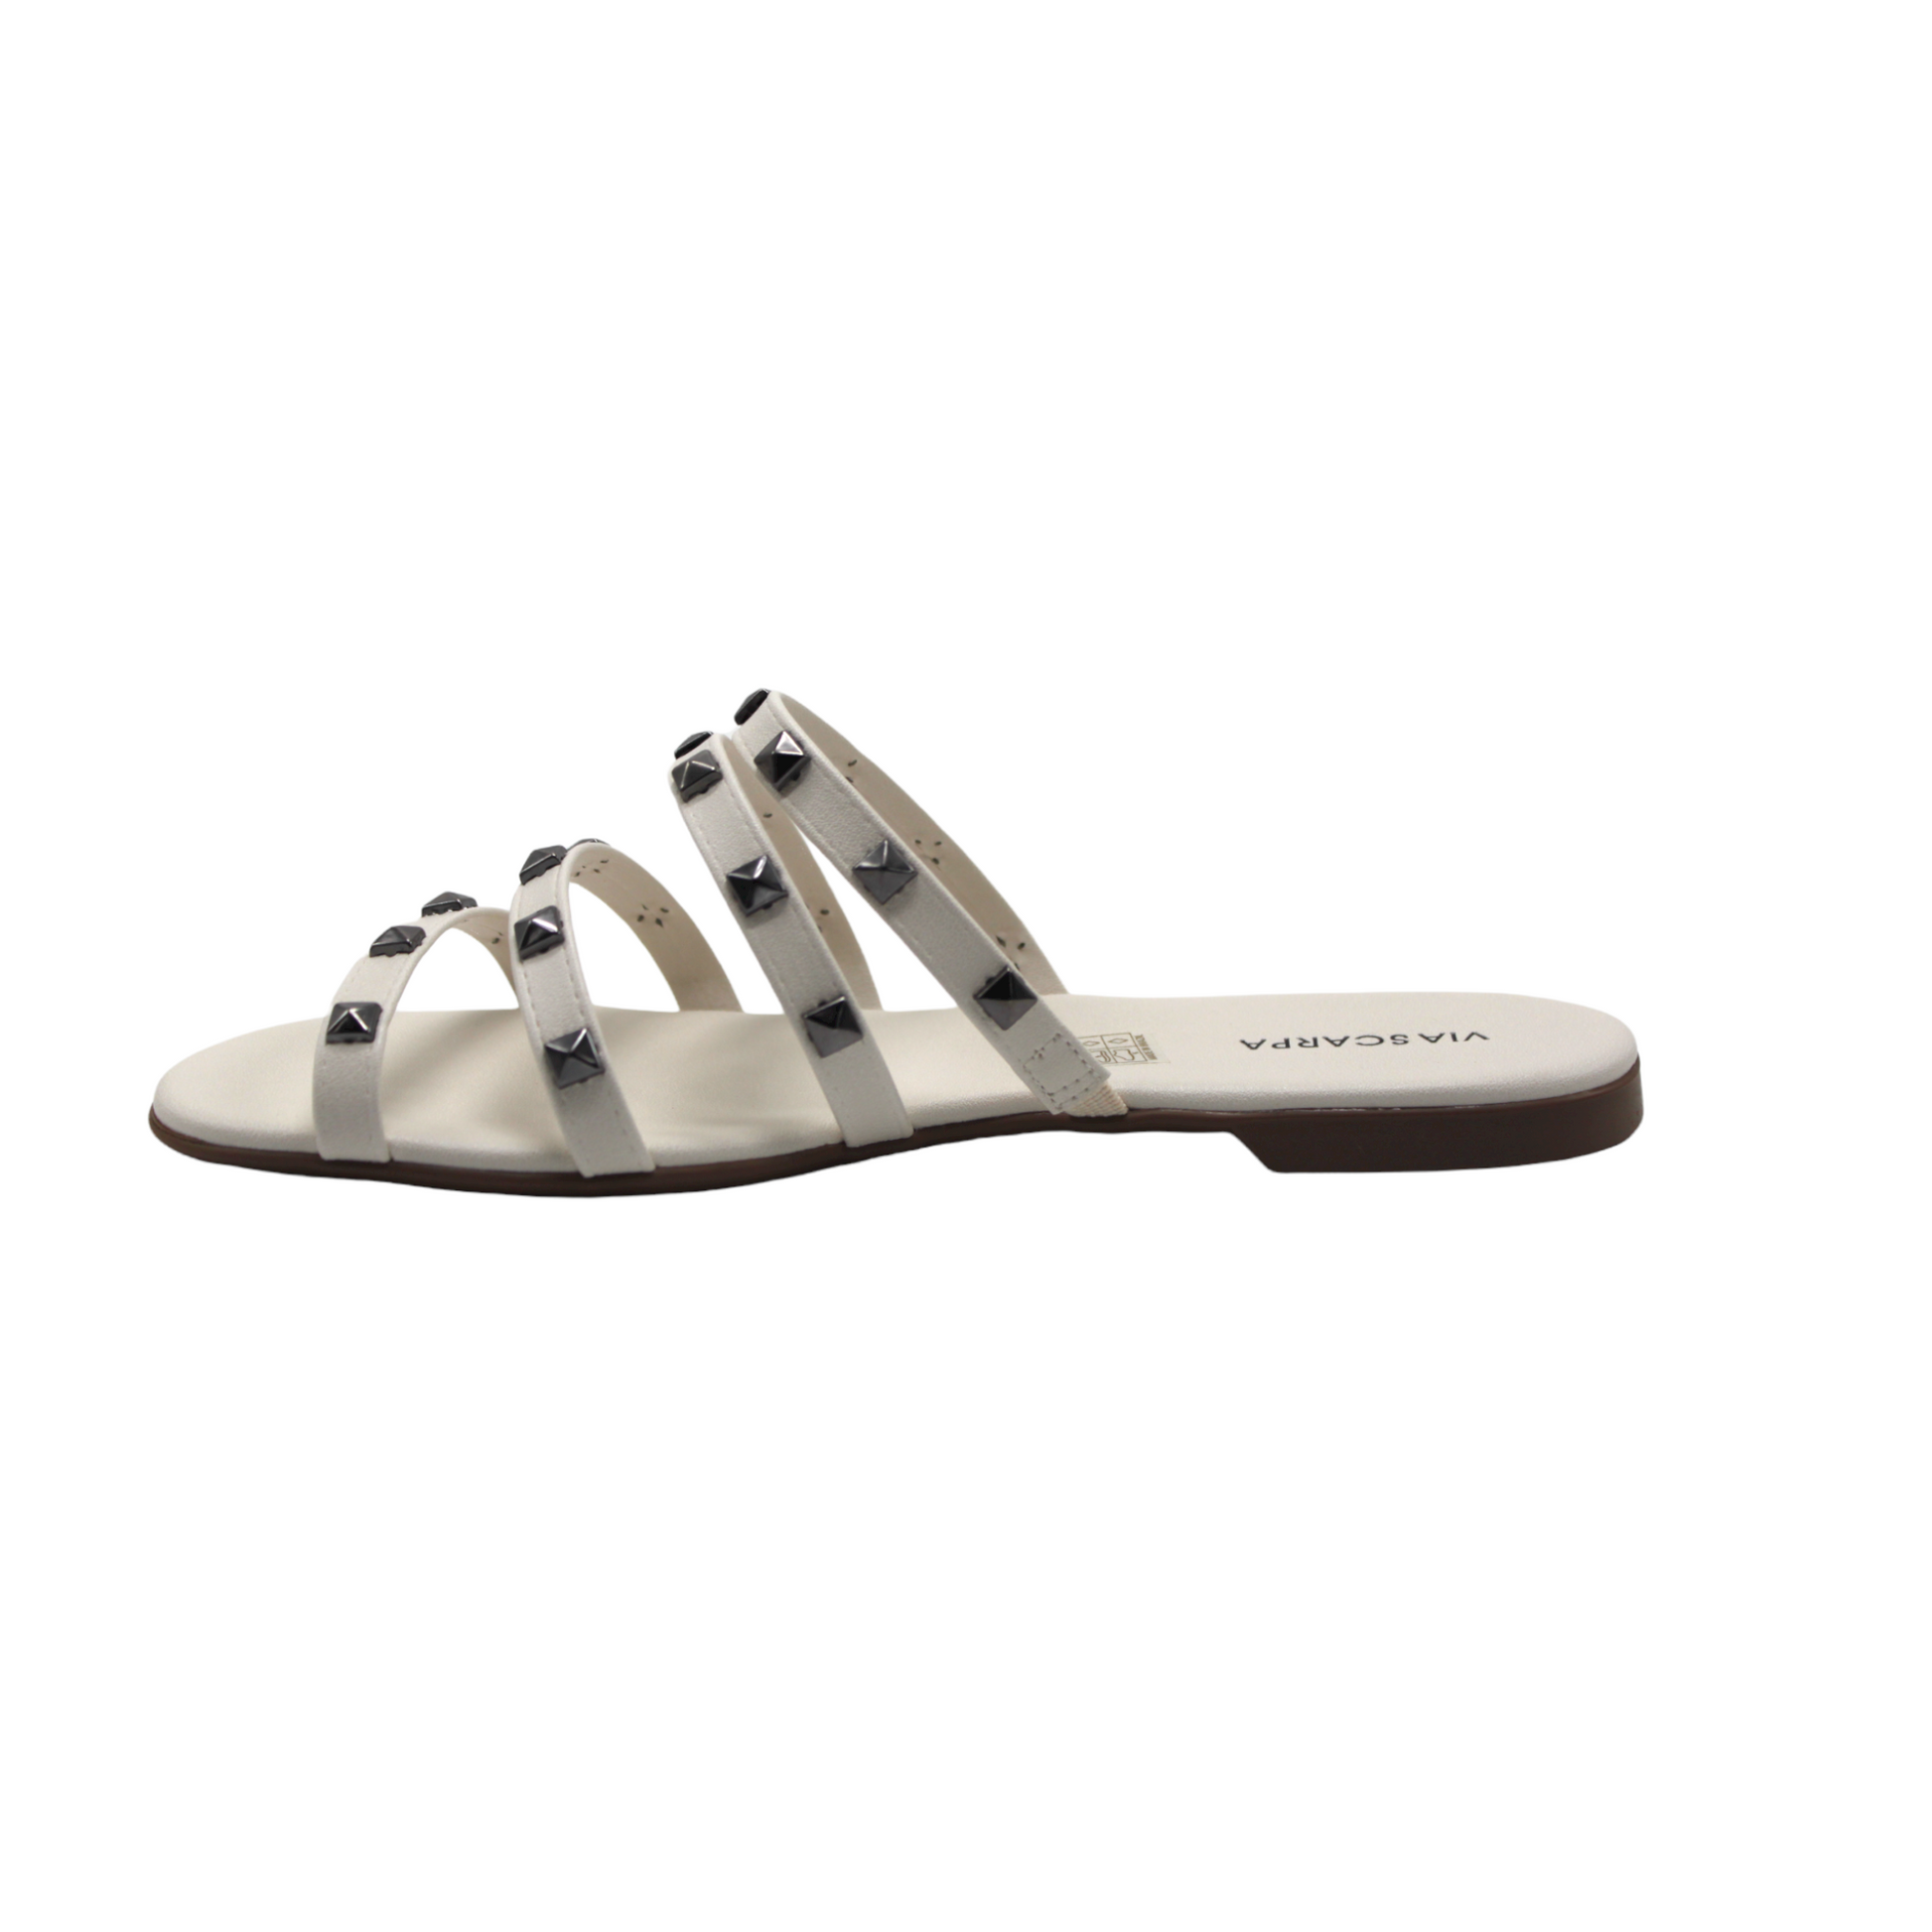 Studded Off White Slip On Flat Sandals - Julia & Santos 